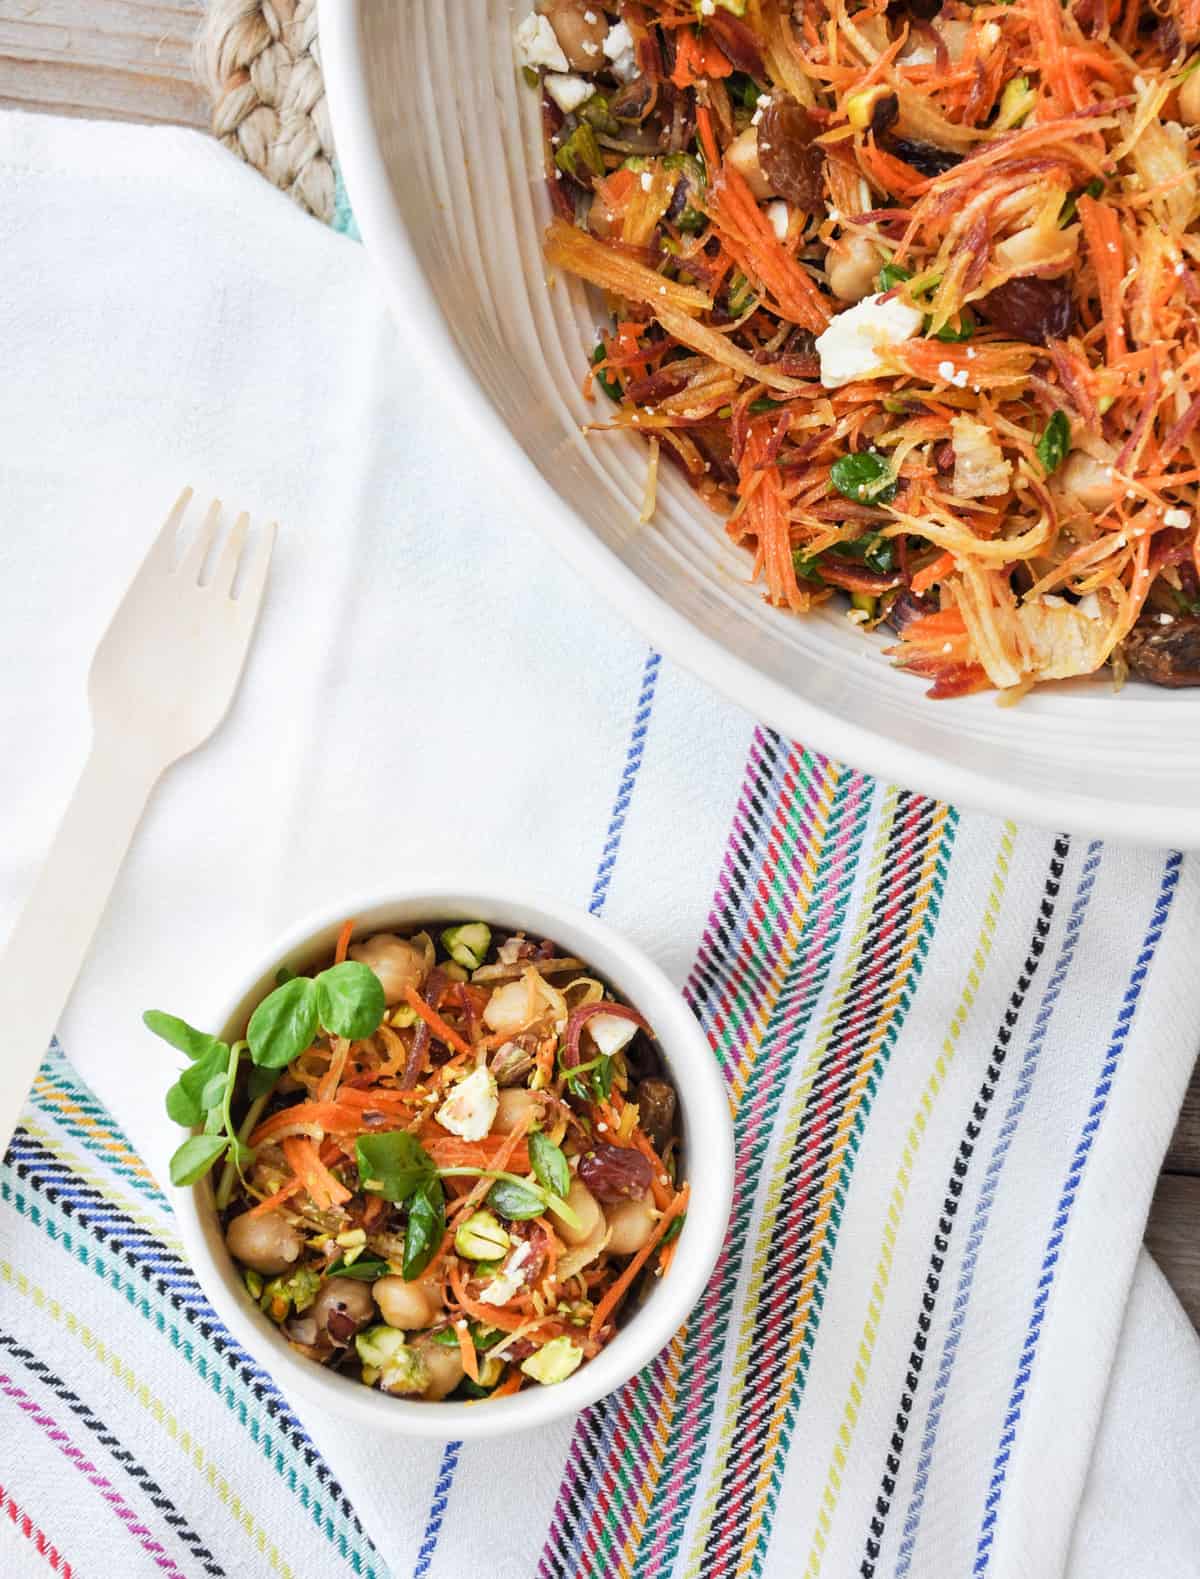 Sunshine Carrot Raisin Salad recipe in bowls